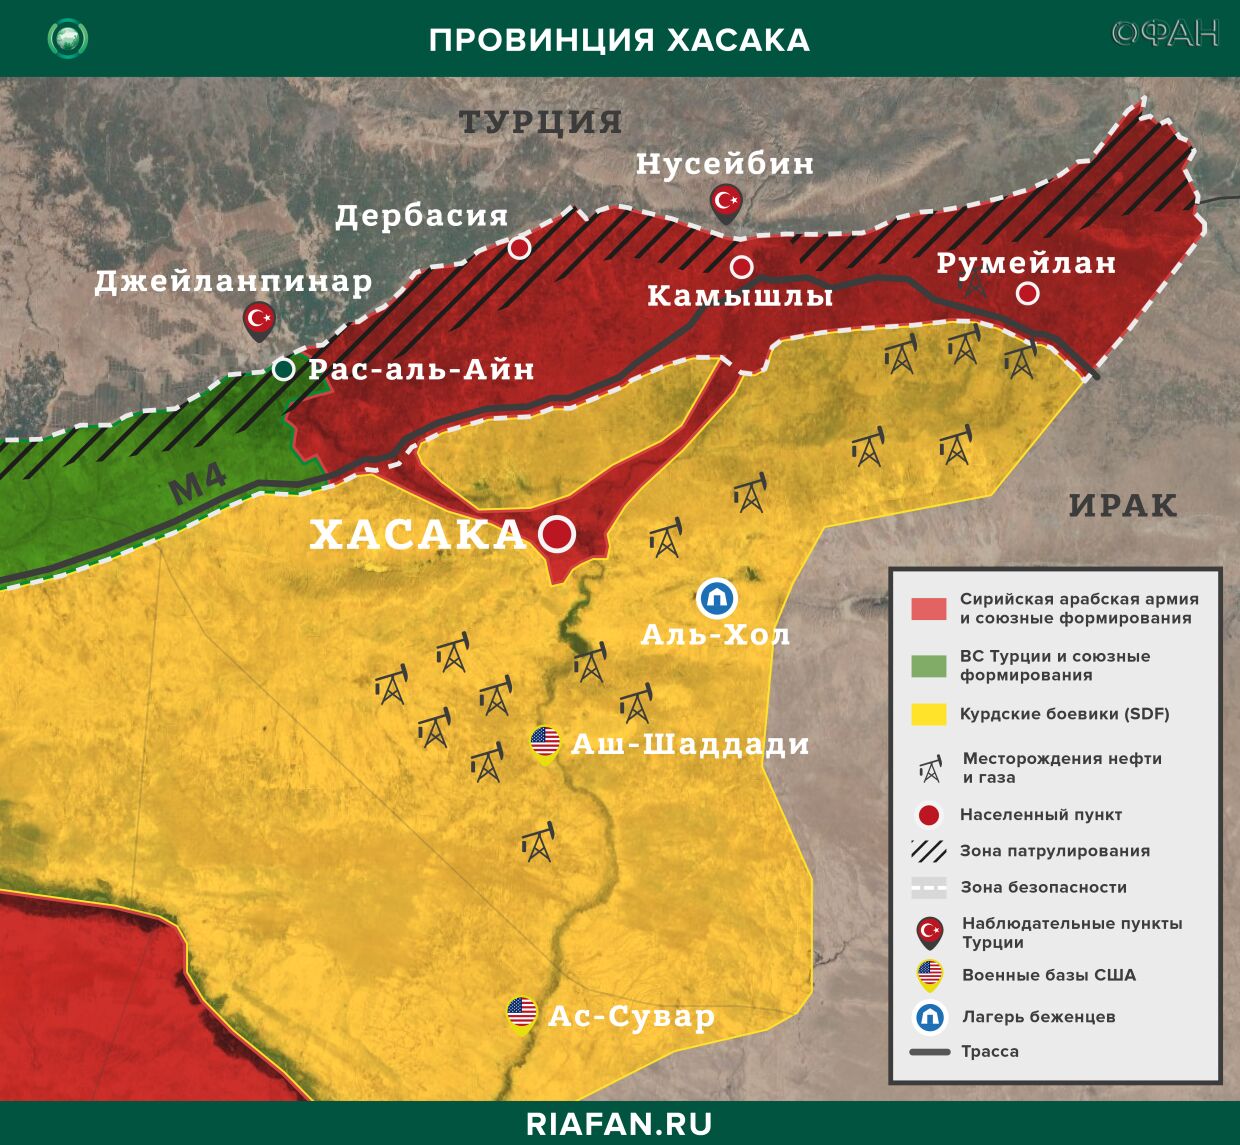 Syria news 4 September 22.30: Kurdish militants accused of hijacking schools in Hasak